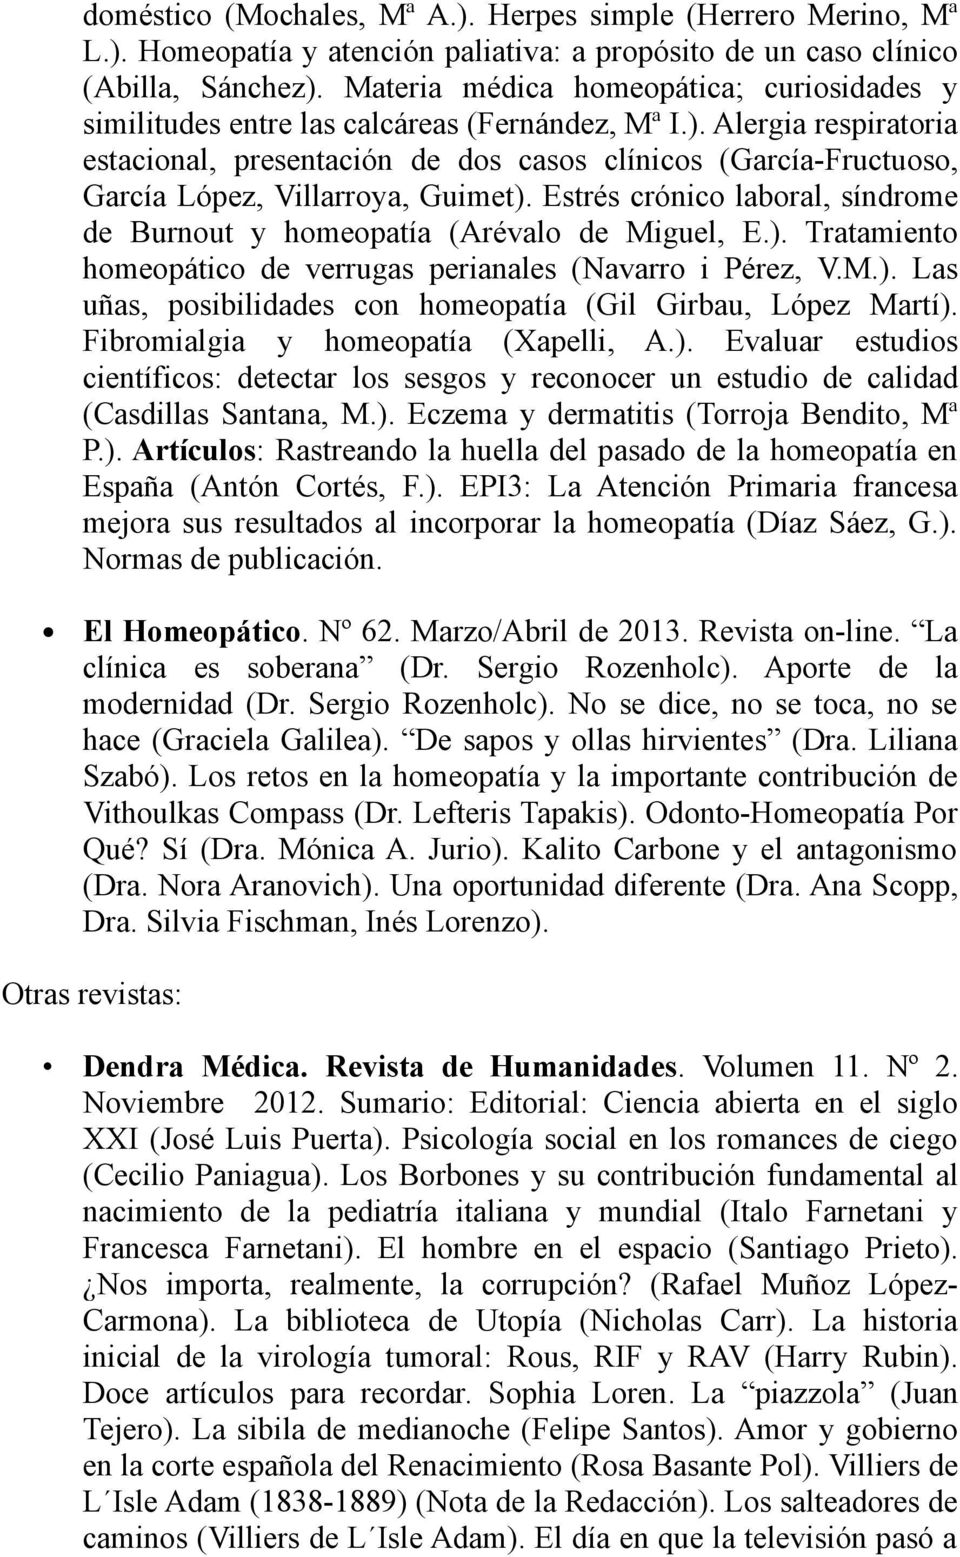 Alergia respiratoria estacional, presentación de dos casos clínicos (García-Fructuoso, García López, Villarroya, Guimet).